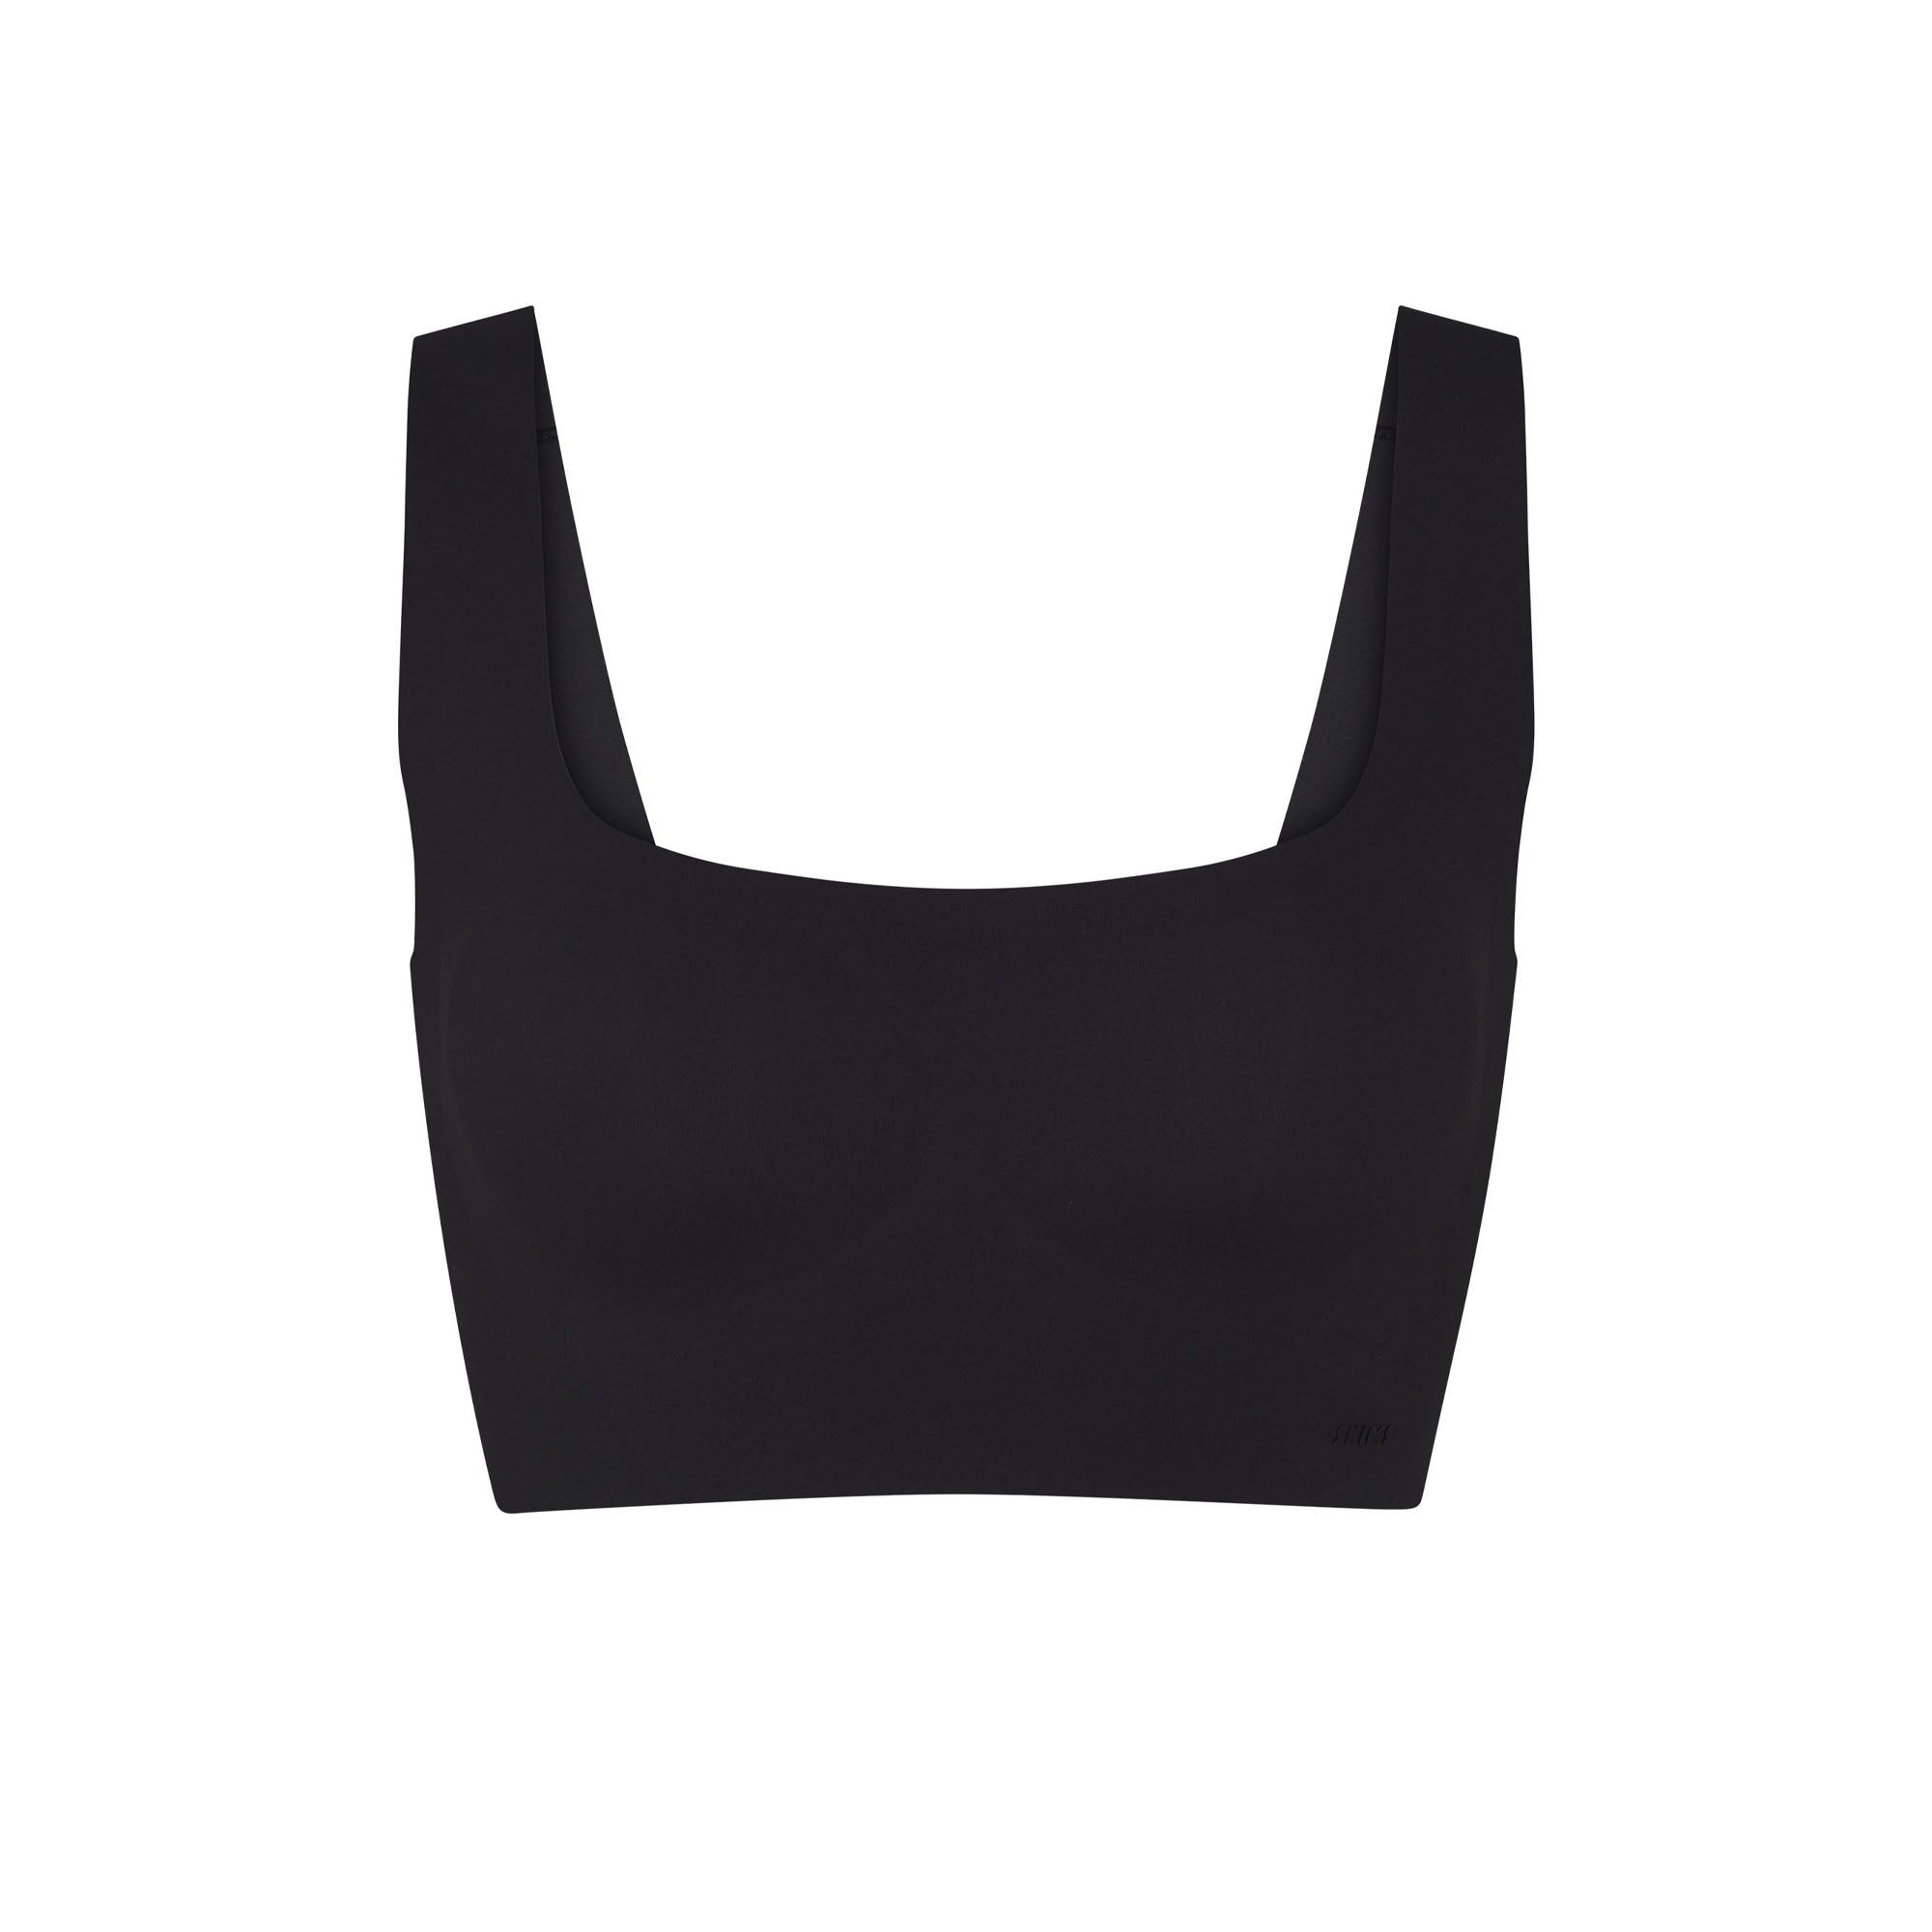 SKIMS T-Shirt Bra NWT 34B Tan Size 34 B - $30 (42% Off Retail) New With  Tags - From Ali